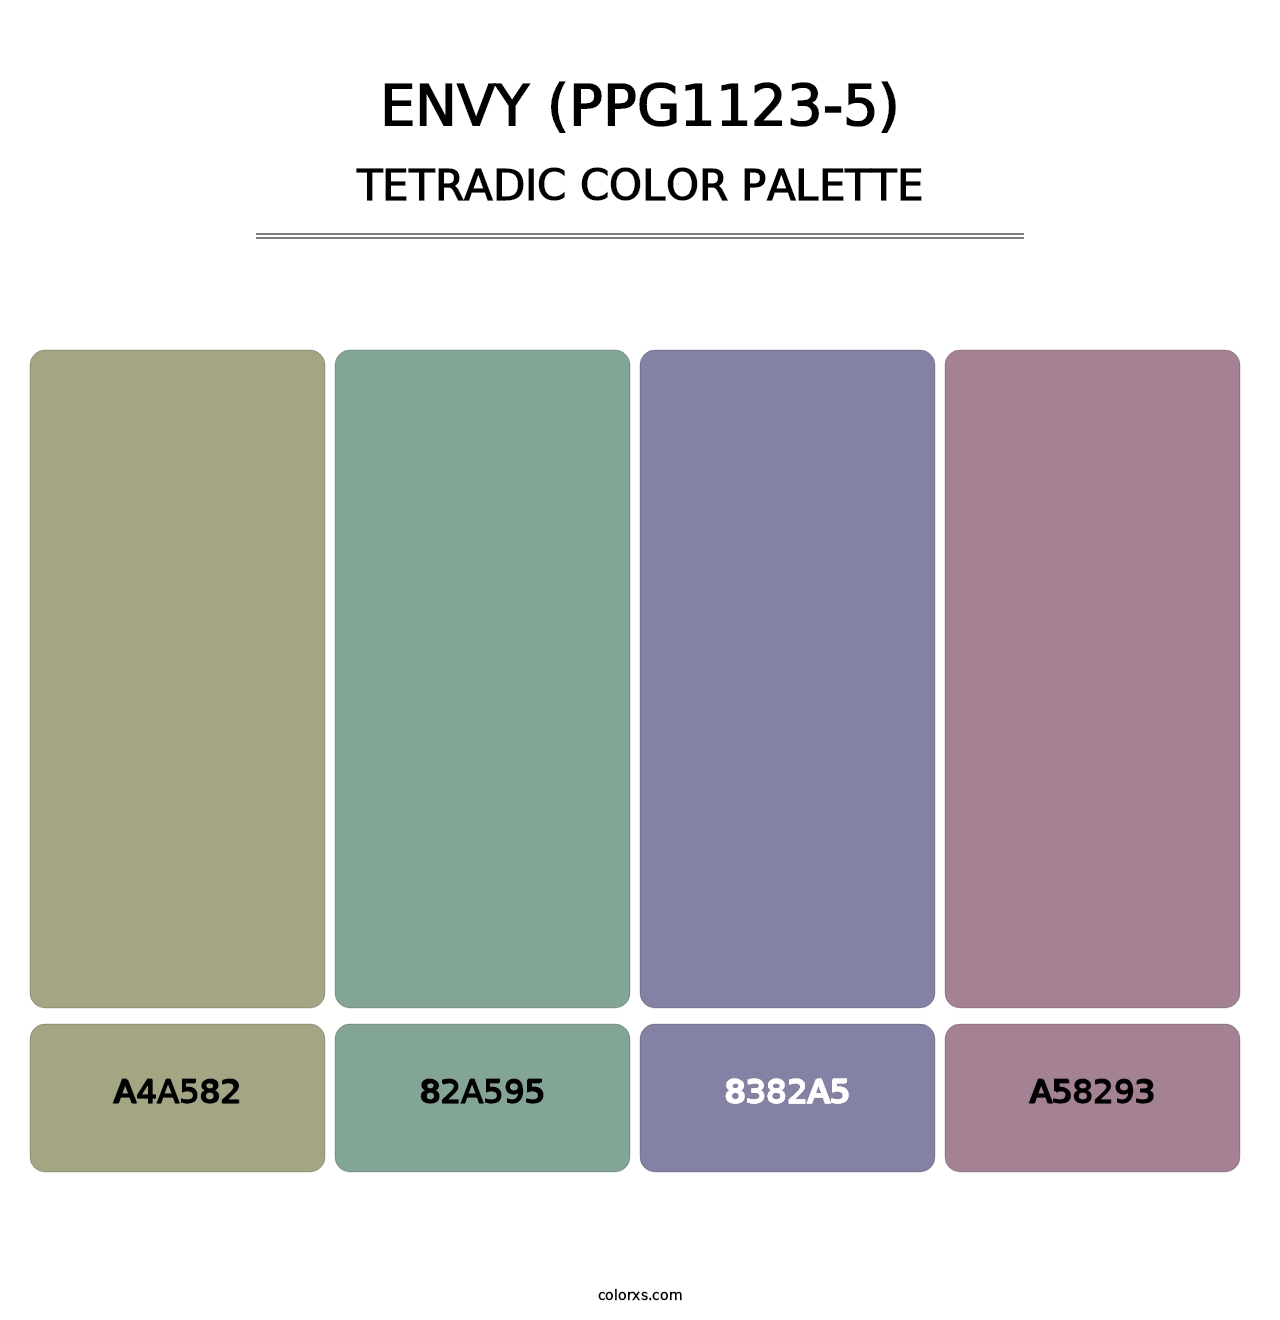 Envy (PPG1123-5) - Tetradic Color Palette